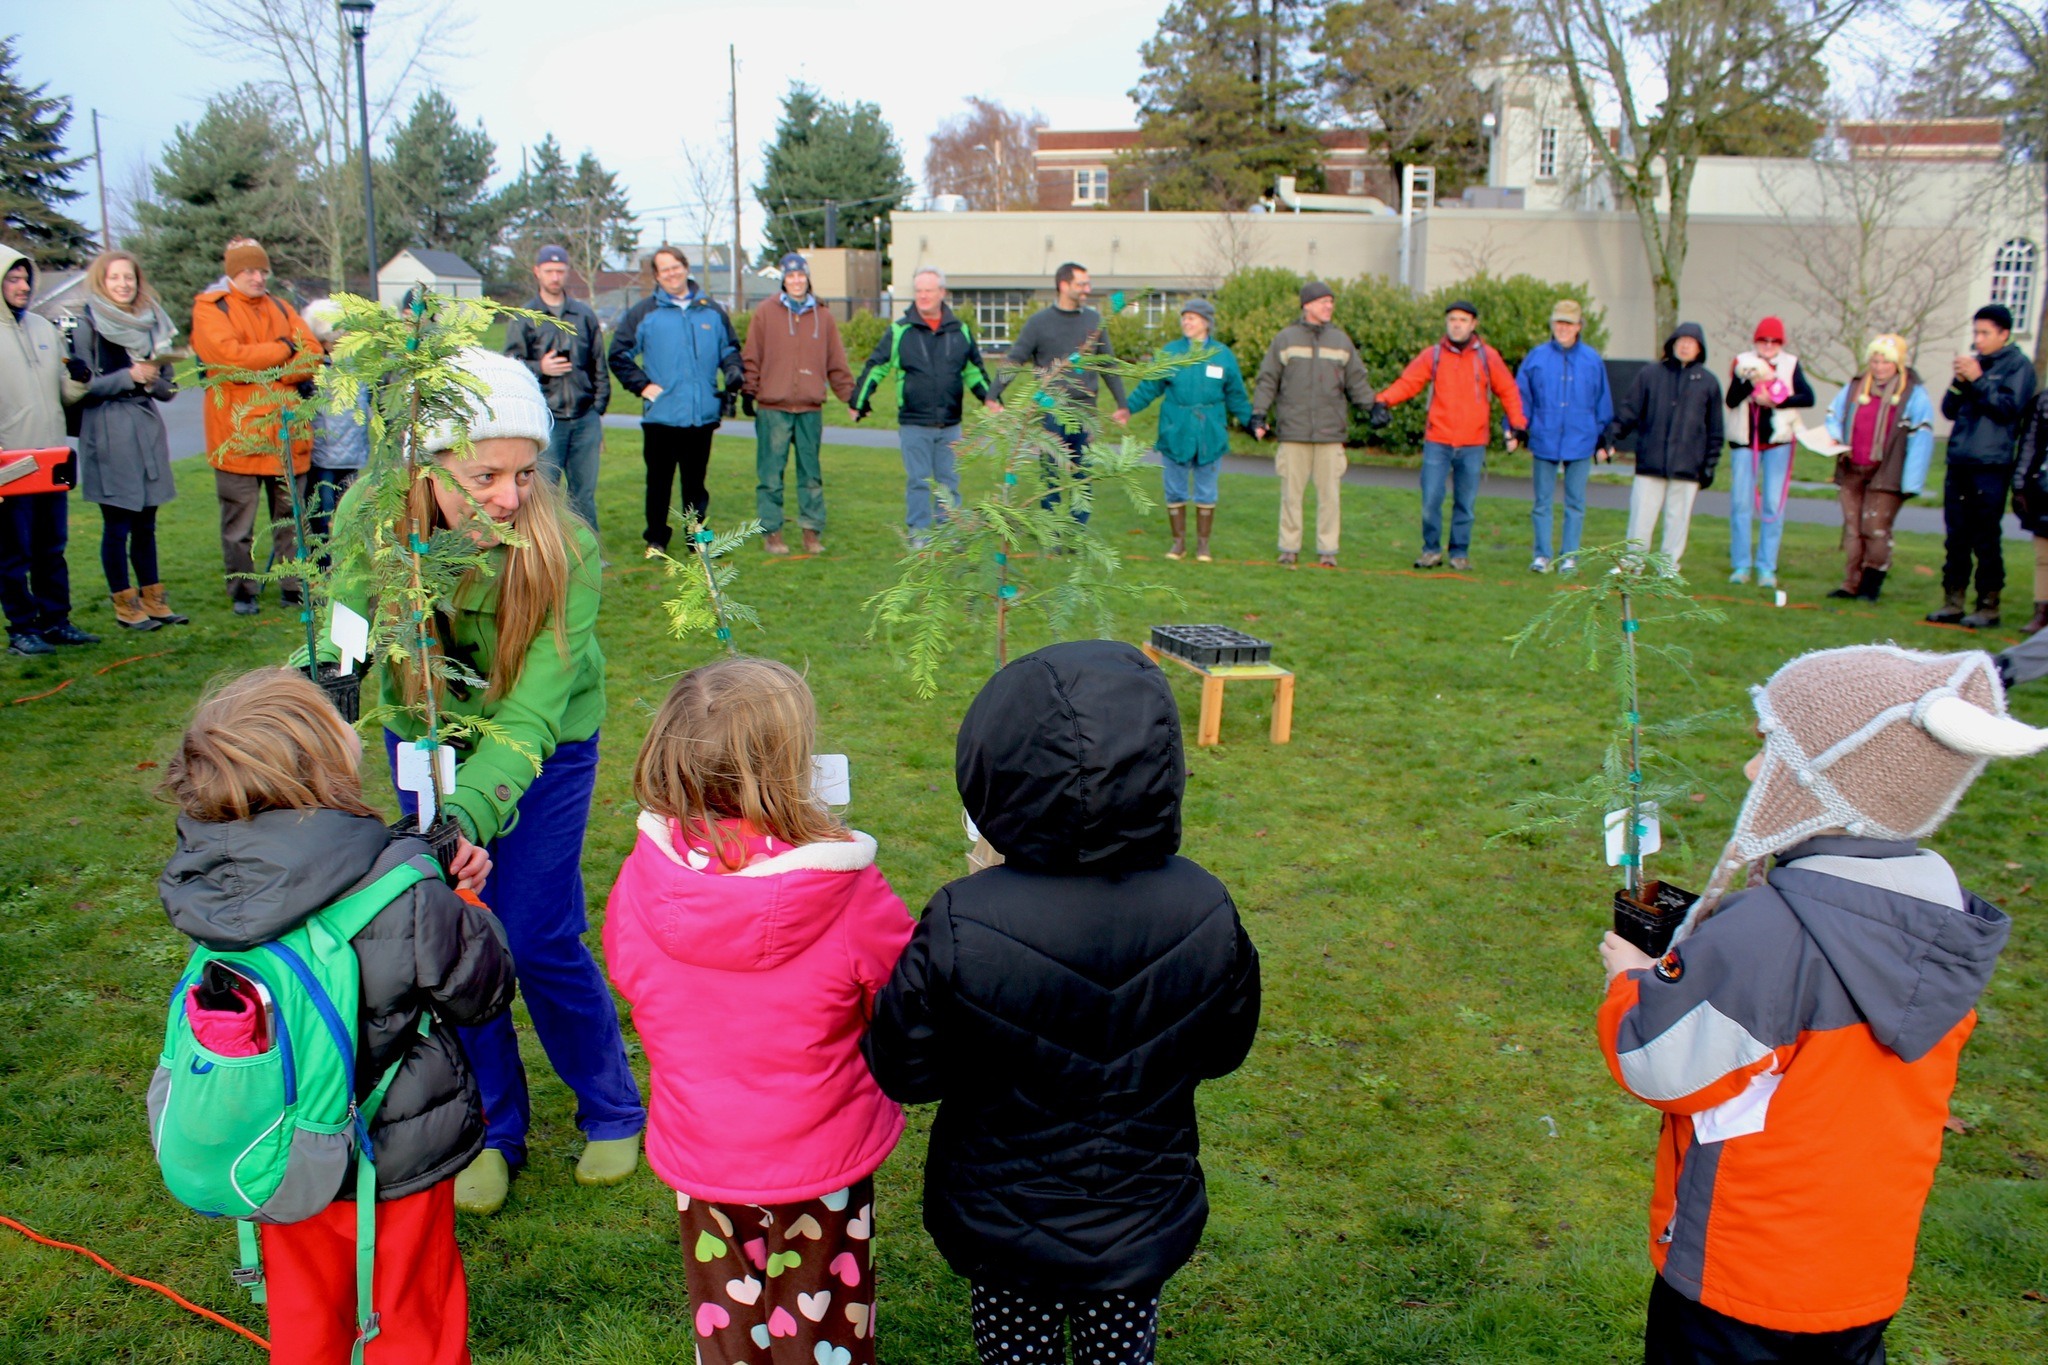 Kid Climate Activists Still Planting Trees, Inspiring Grownups